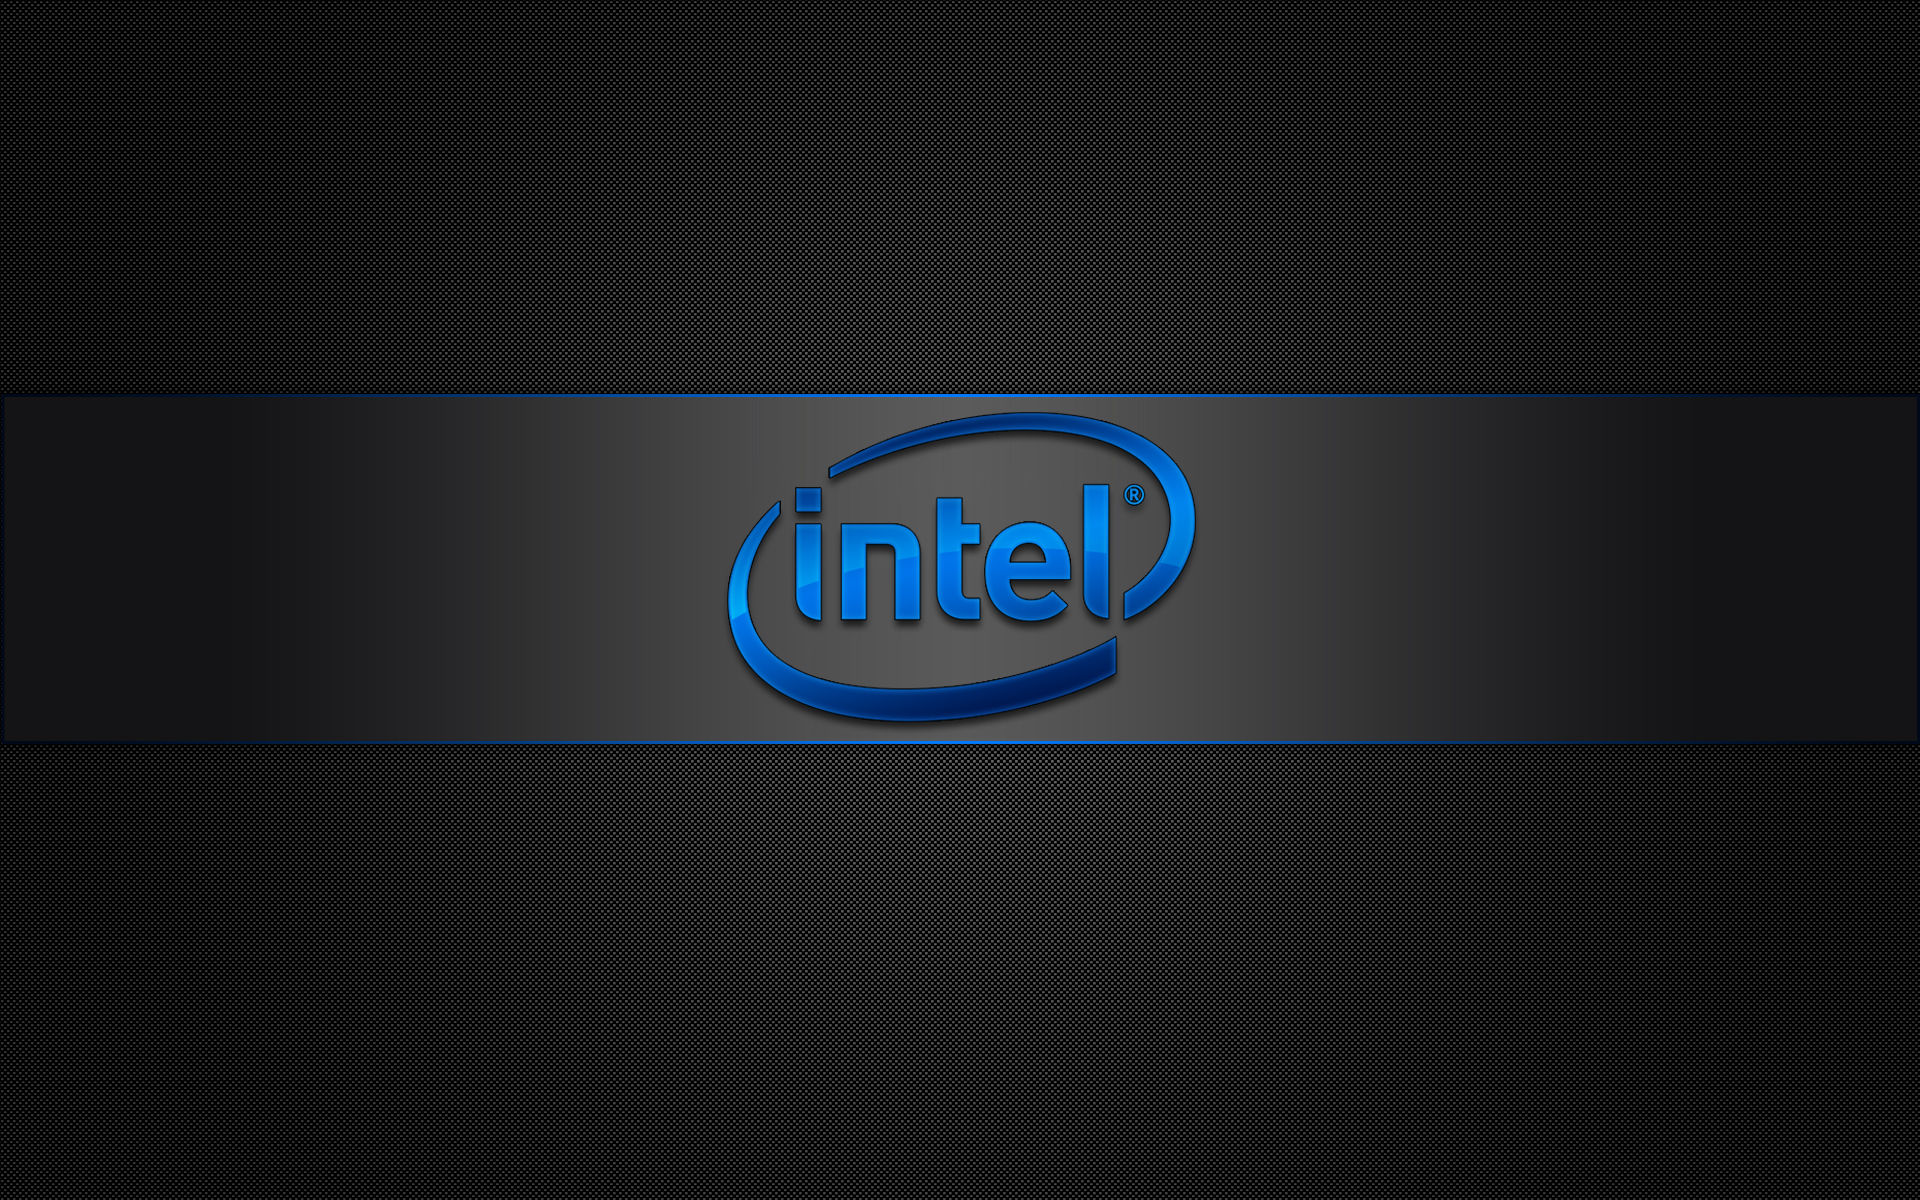  Intel In its most current form a Pentium processor is a consumer